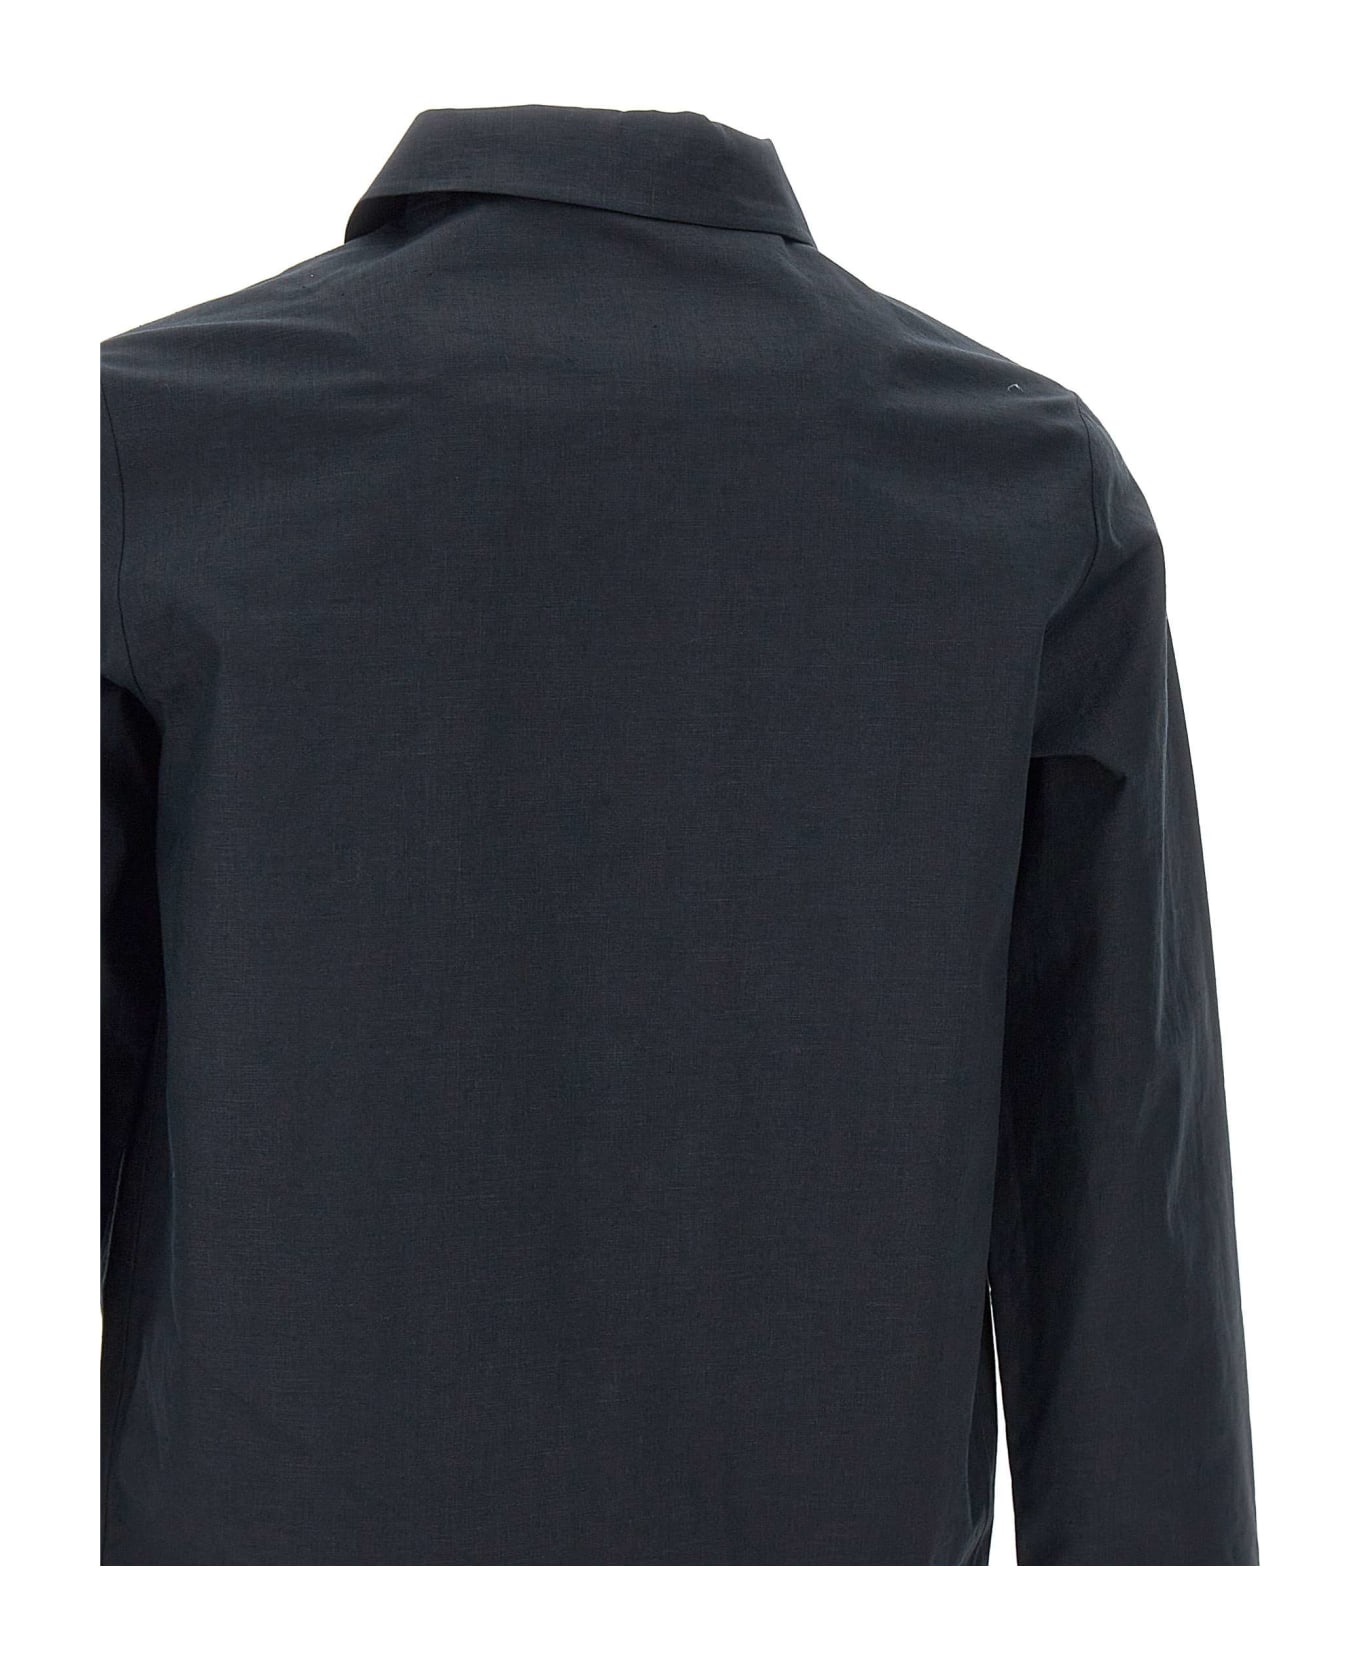 RRD - Roberto Ricci Design "terzilino Overshirt" Linen Jacket - BLUE ジャケット